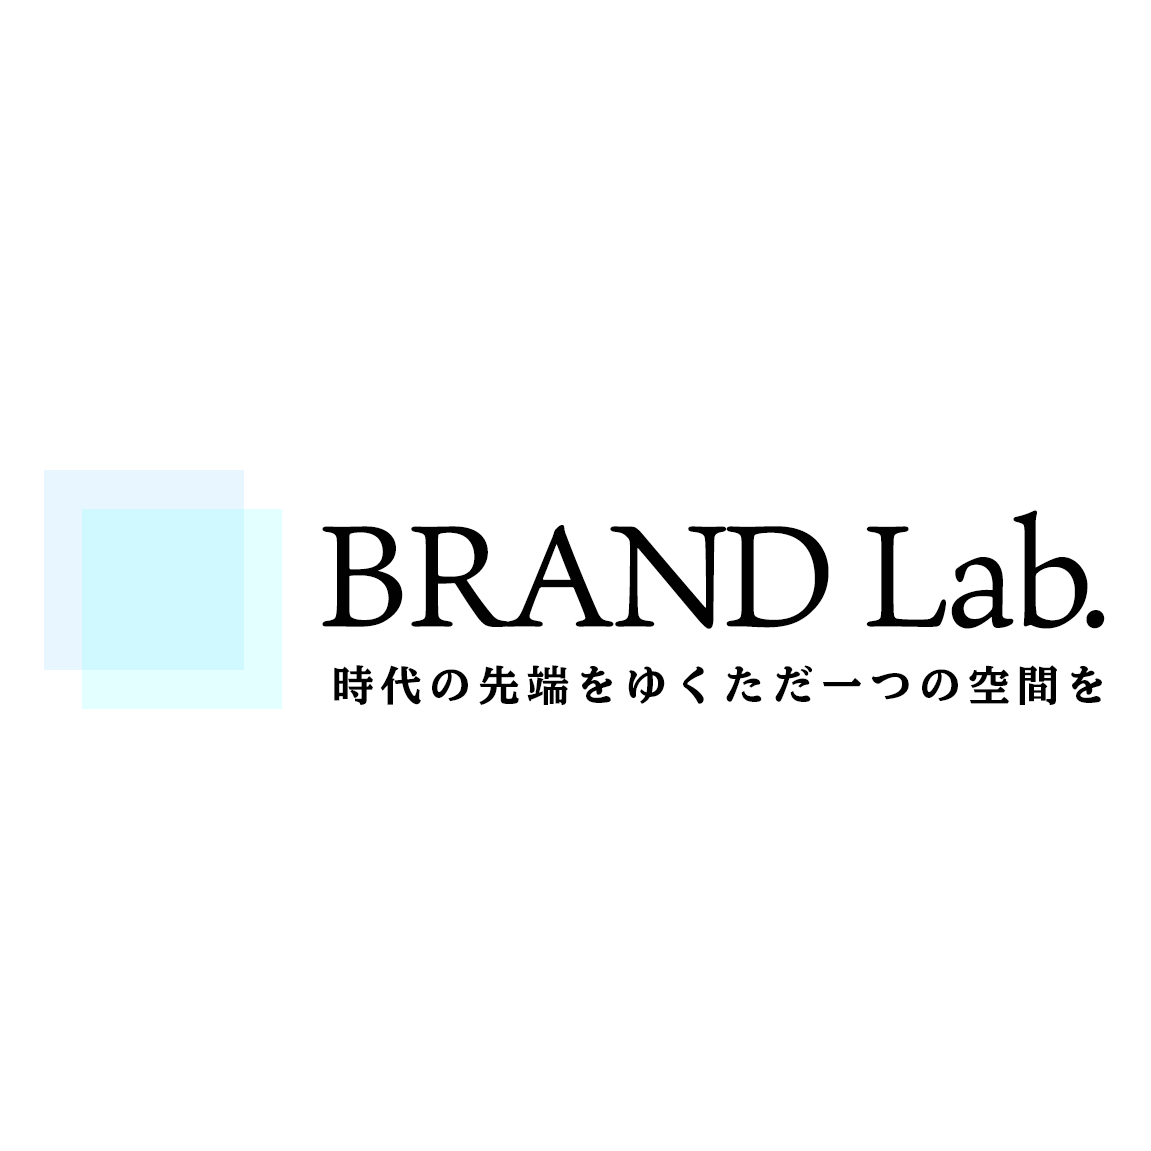 株式会社BRAND Lab.